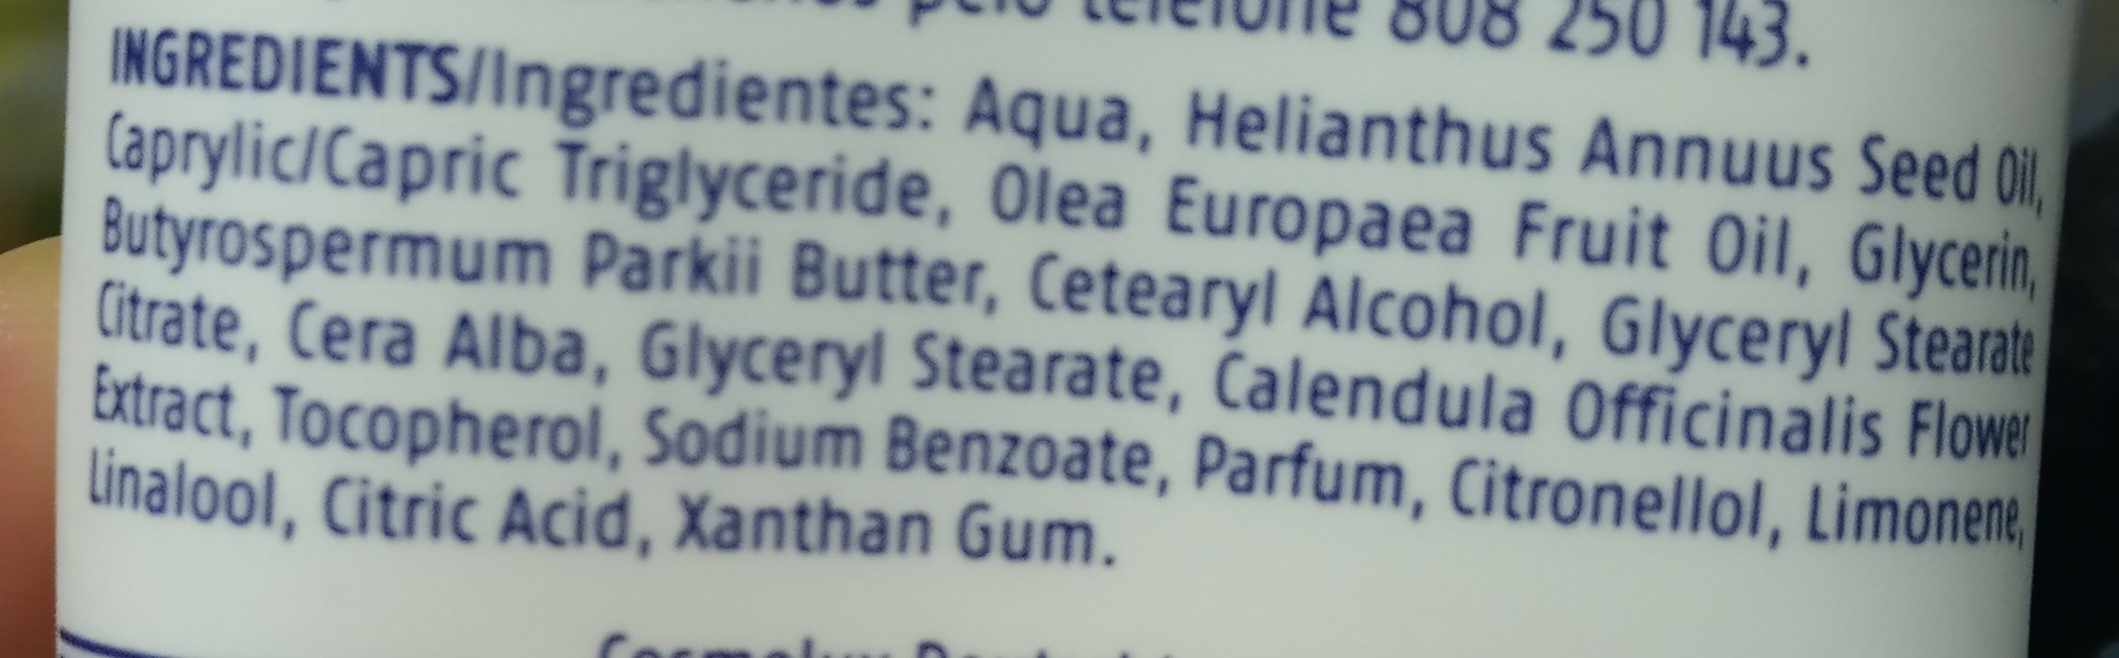 Crème mains calendula - Ingredients - fr